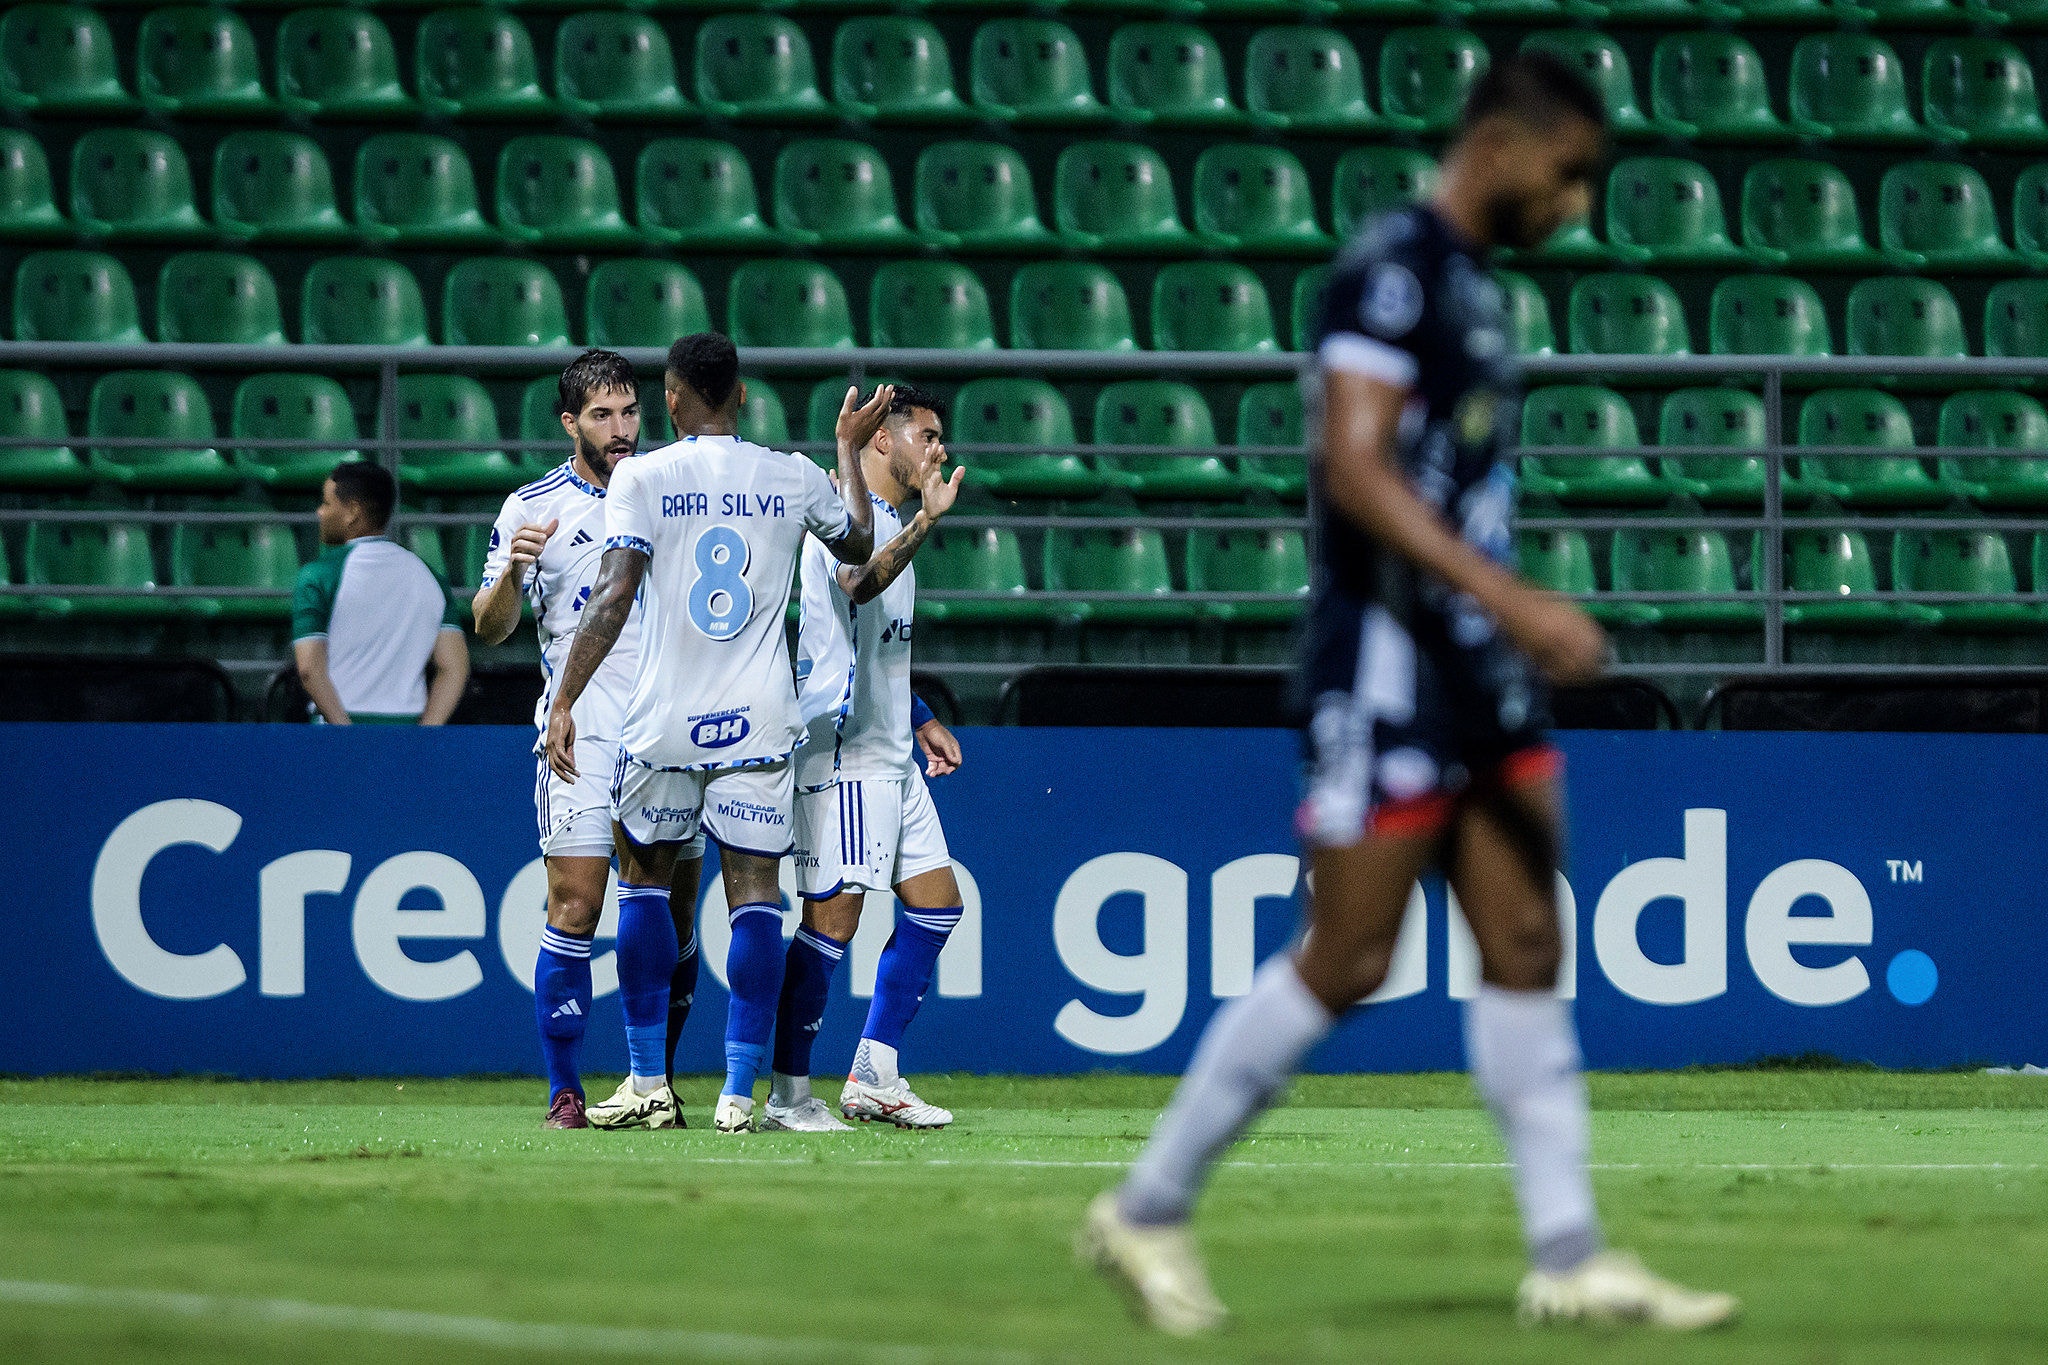 Lucas Silva, Arthur Gomes e Rafael Elias marcaram os gols do time mineiro